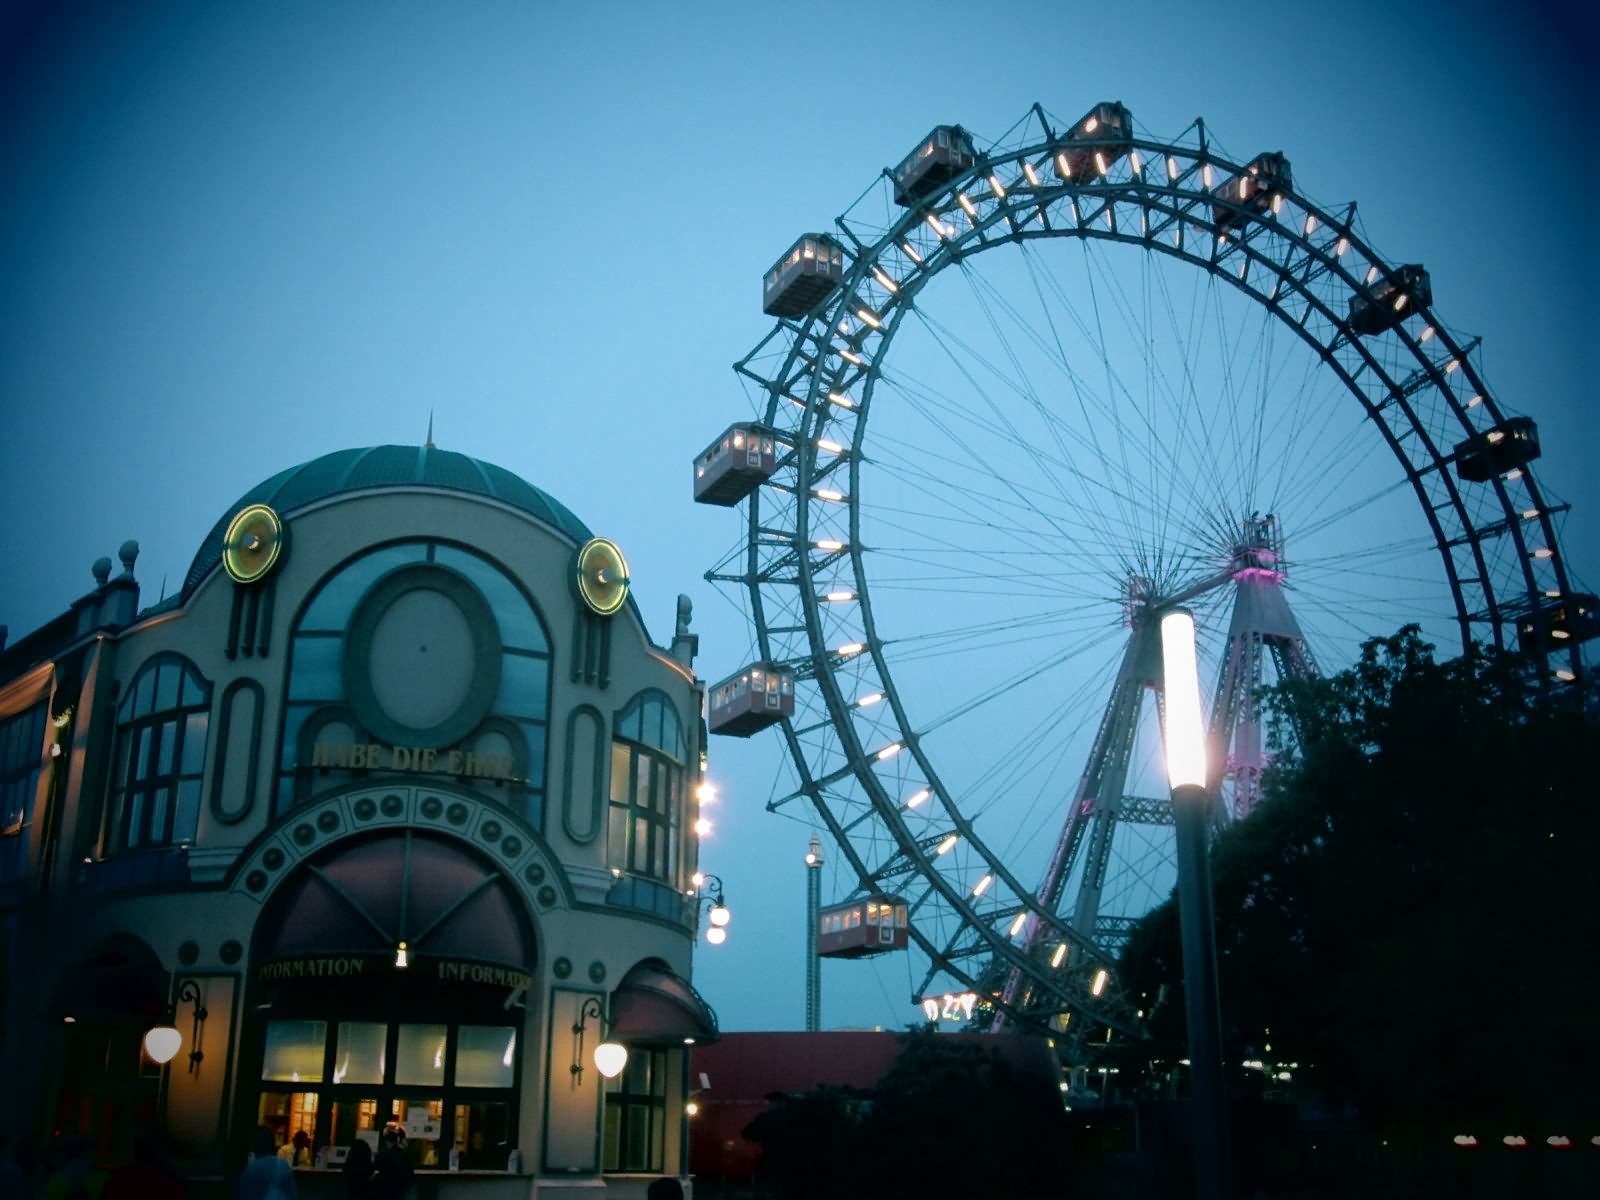 Wiener Riesenrad Ferris Wheel During Night